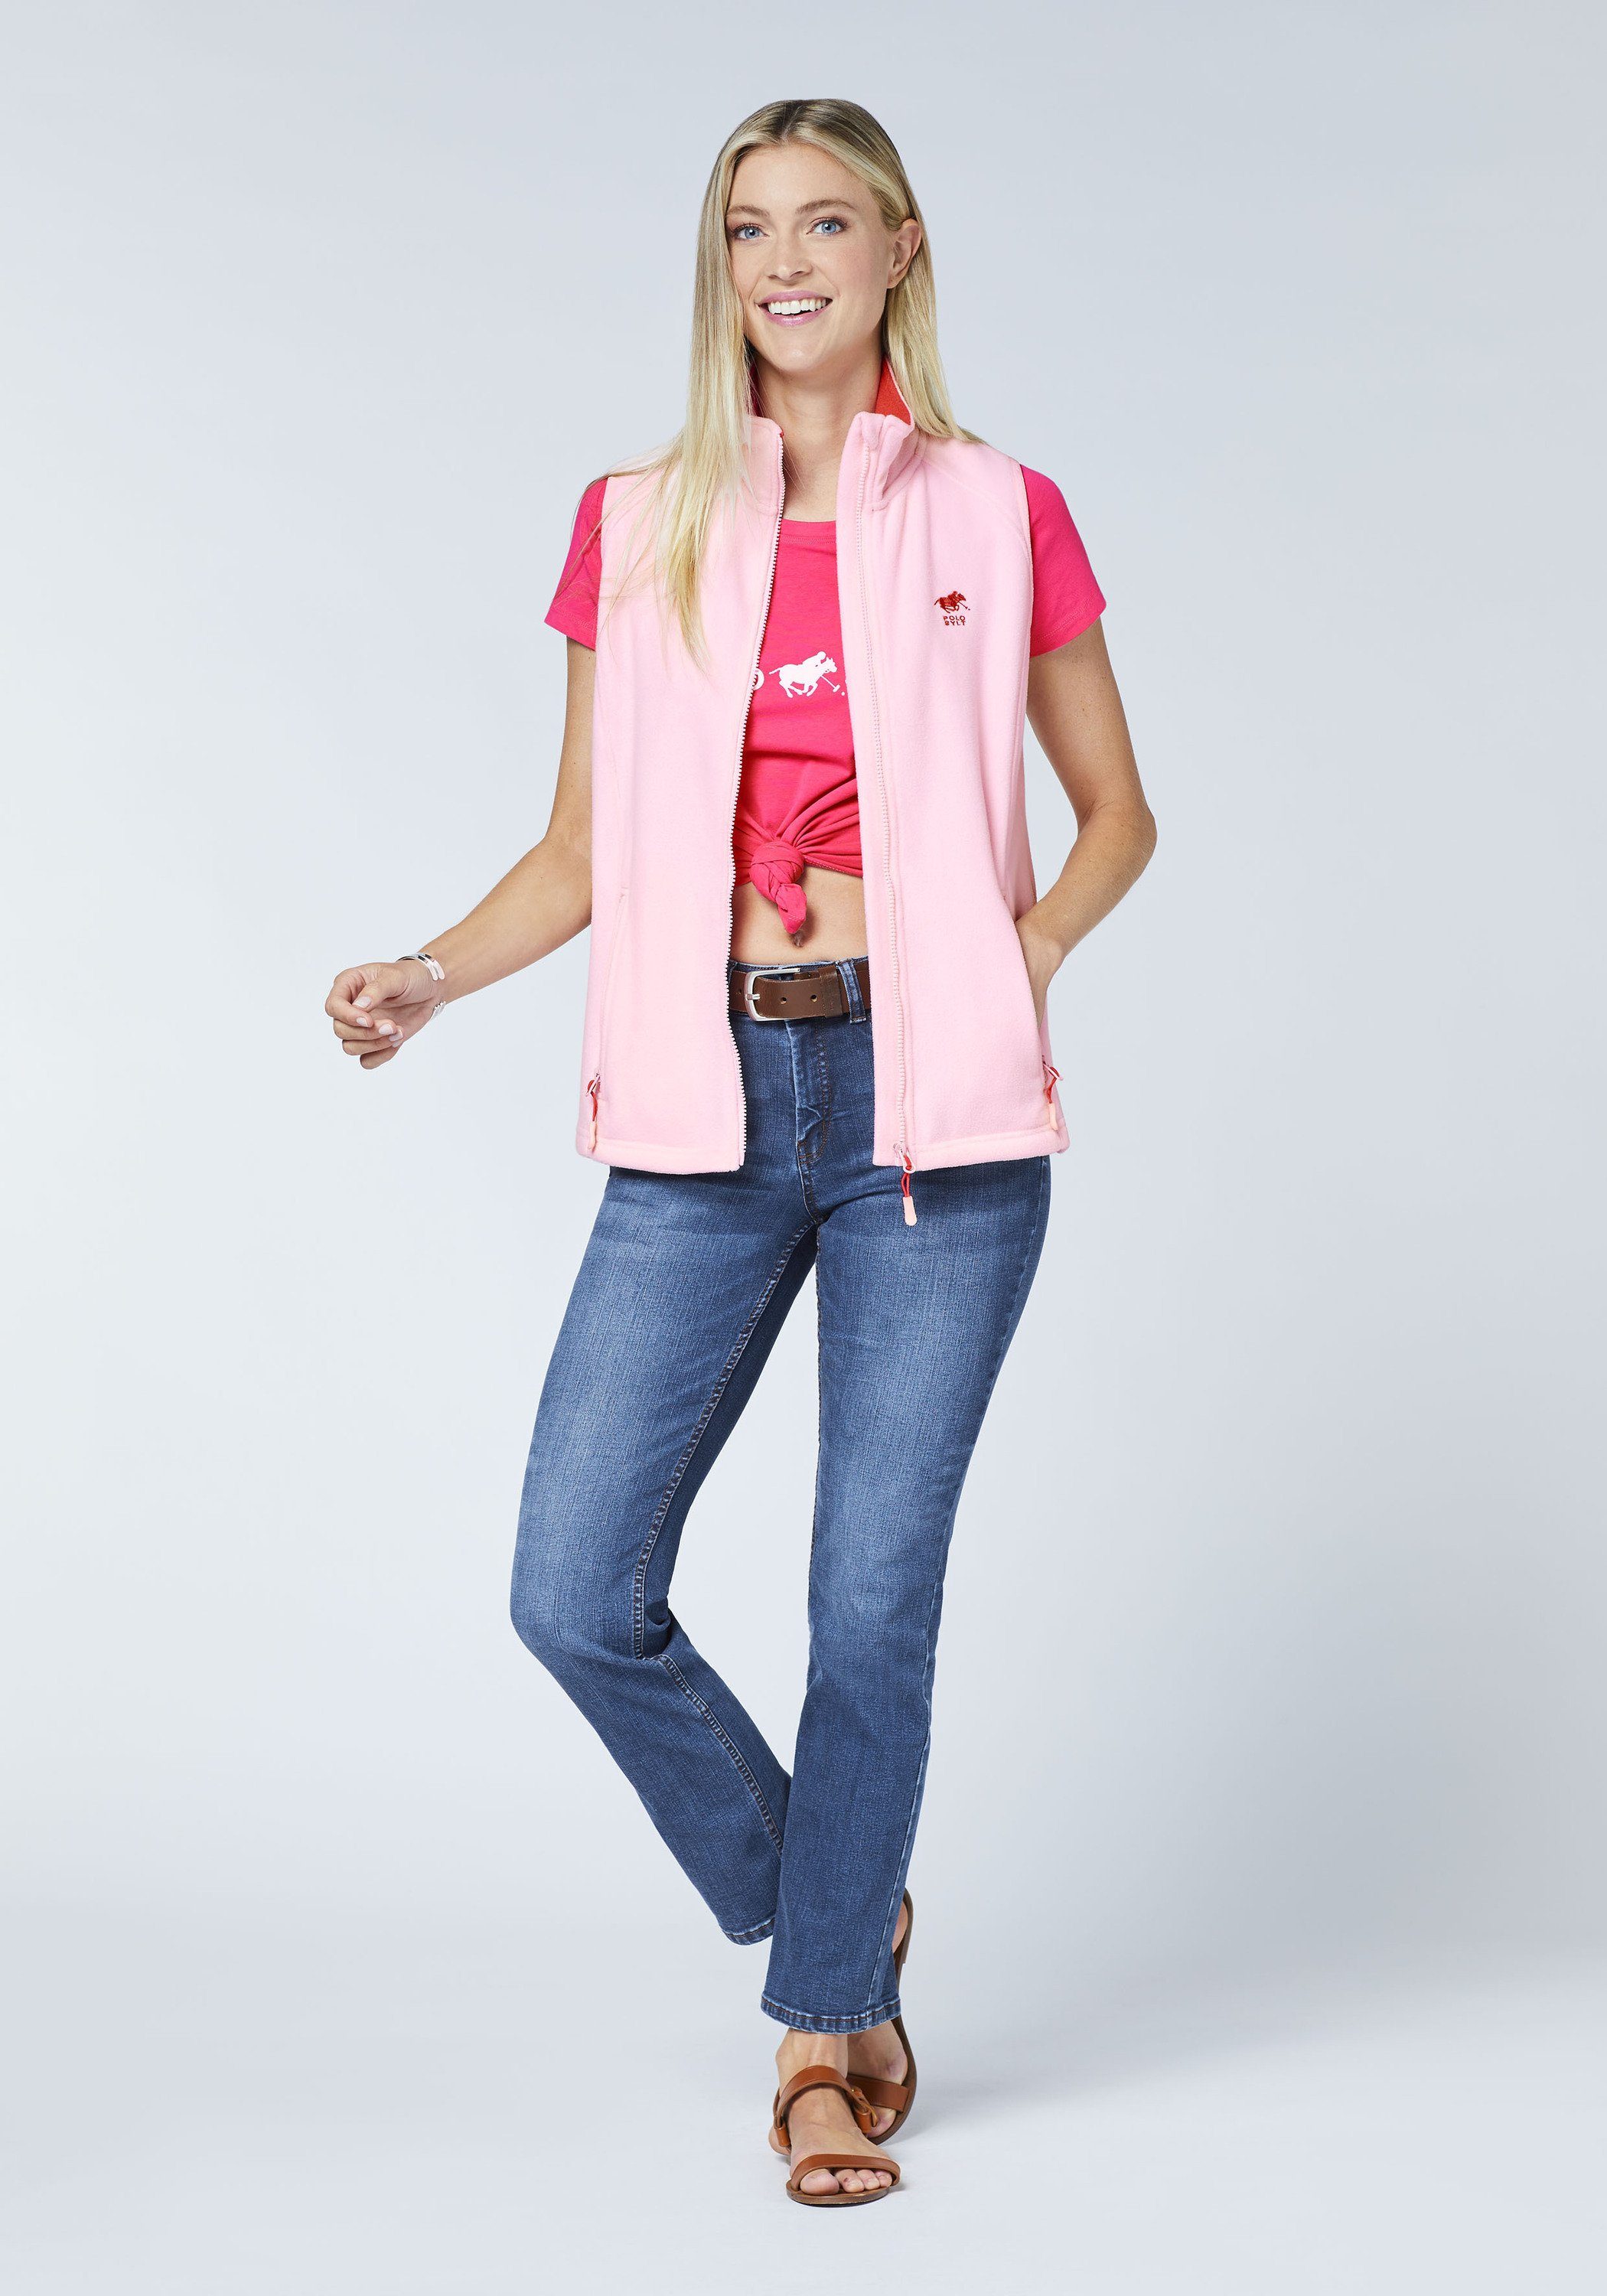 Polo Sylt Fleeceweste Frontreißverschluss Kinnschutz Lady mit 13-2806 Pink